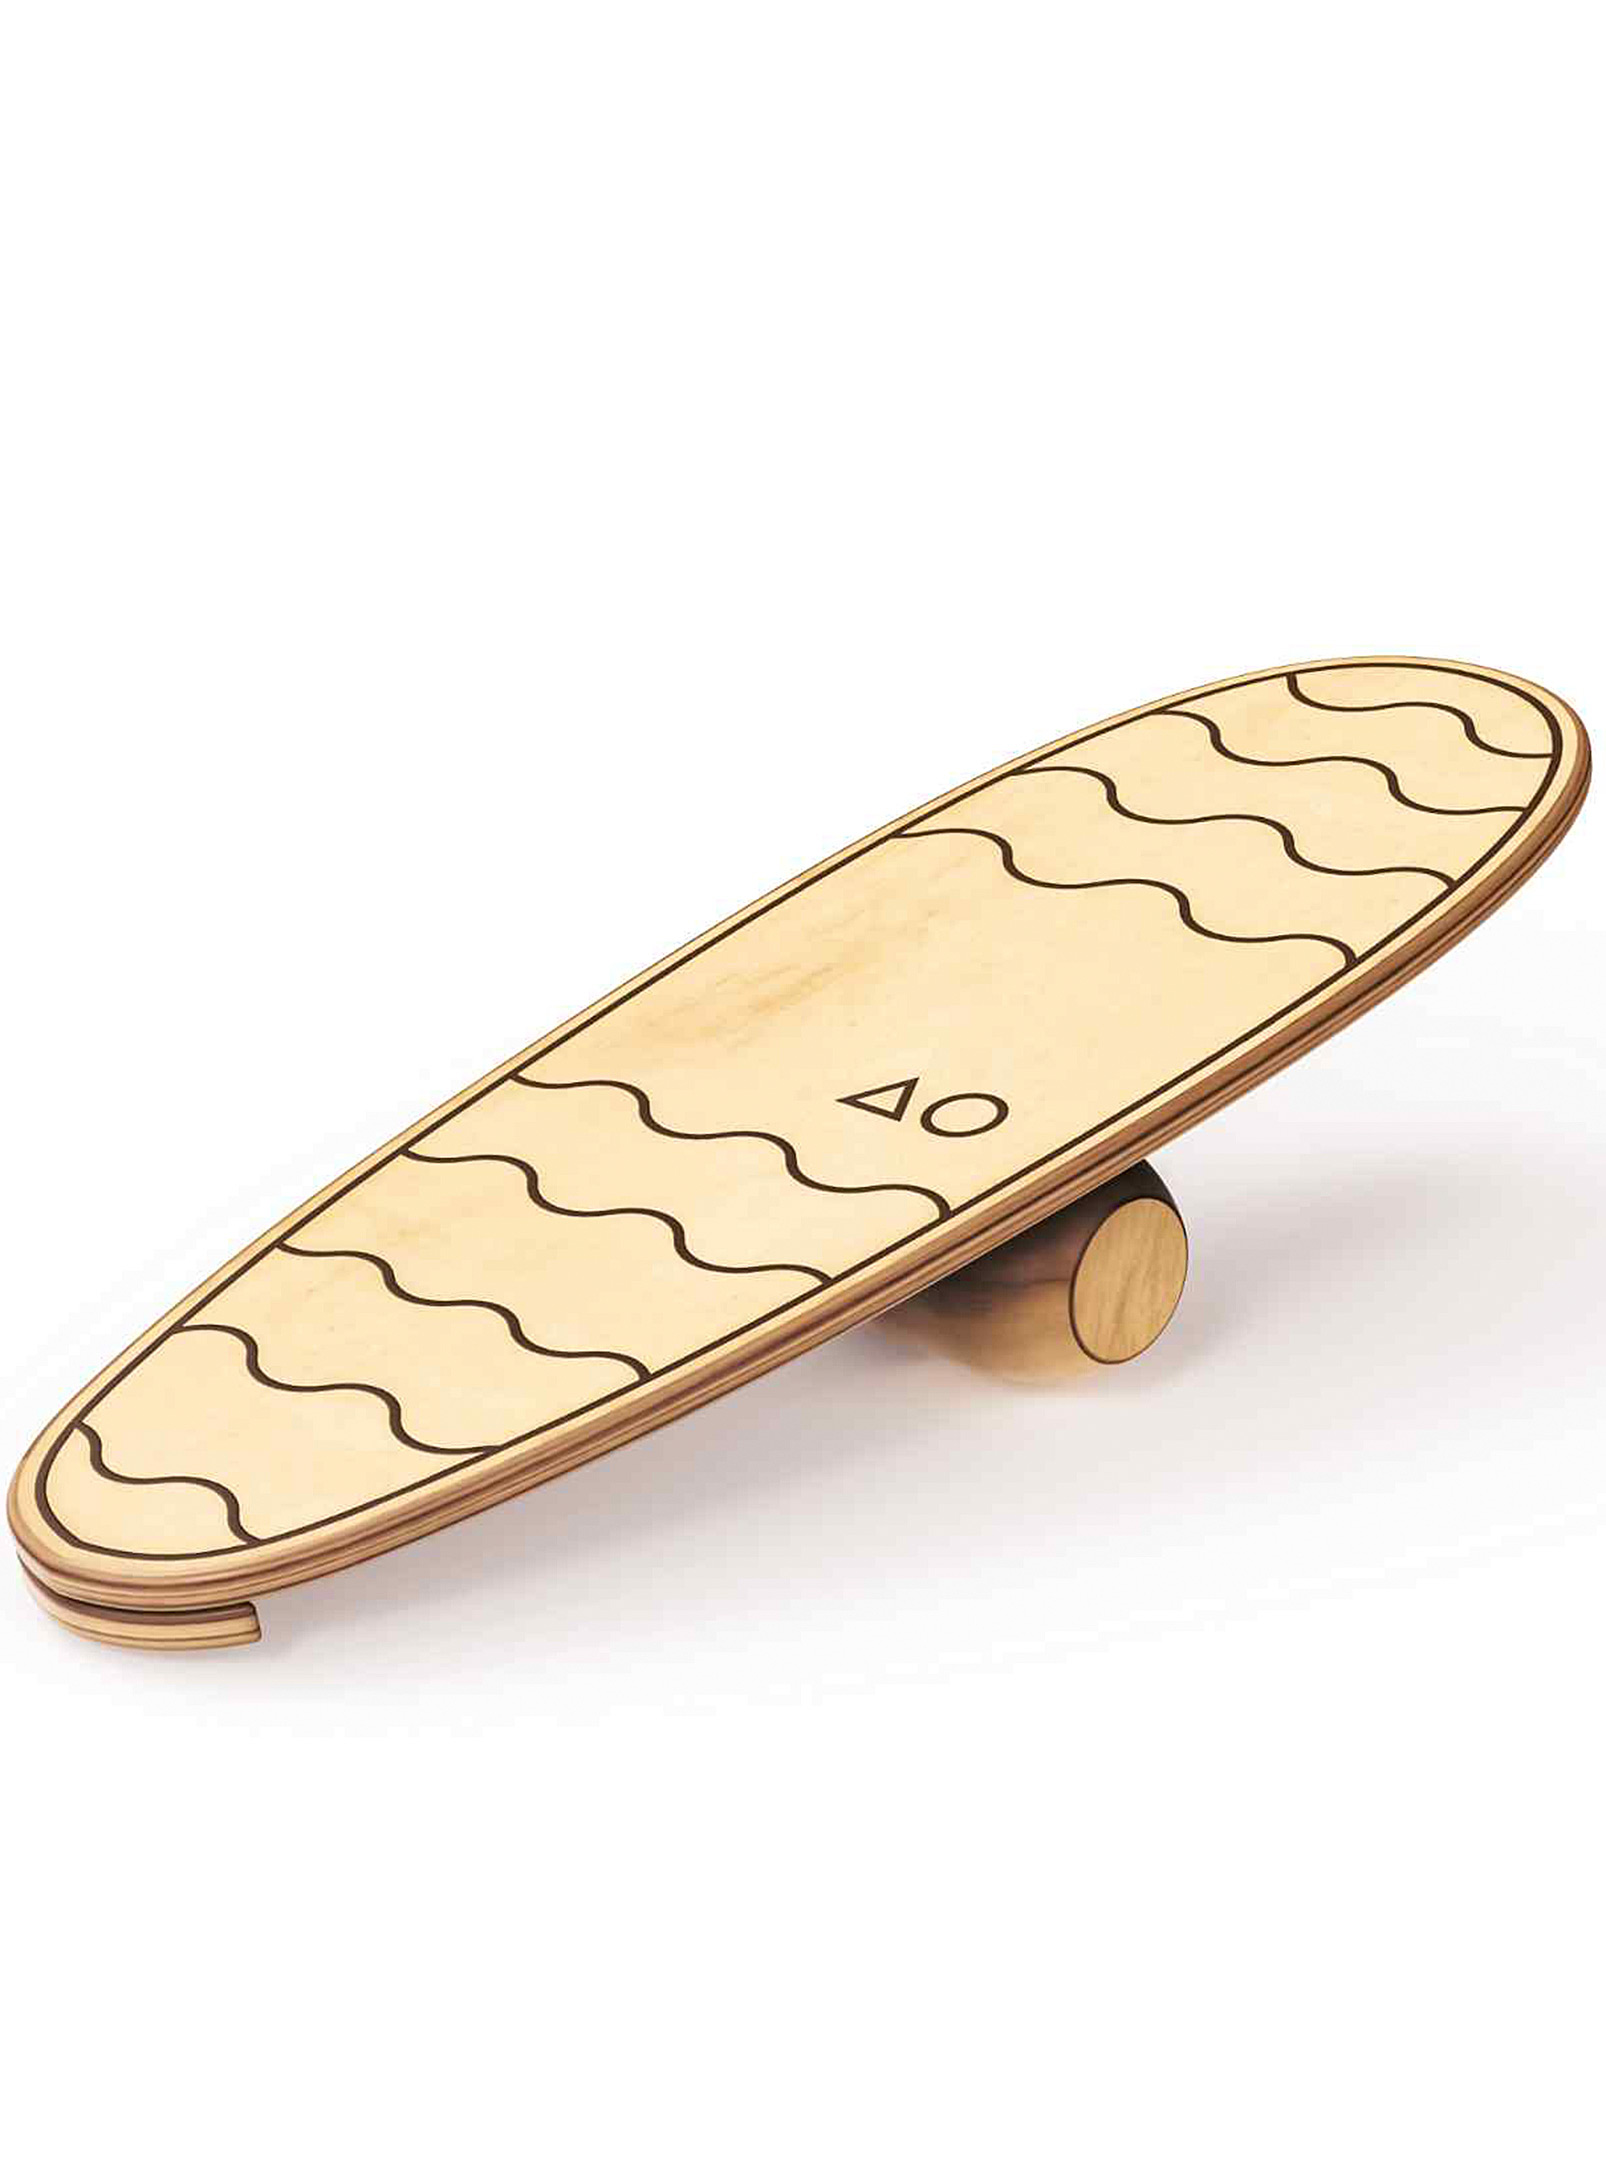 All Circles - Surf wooden balance board